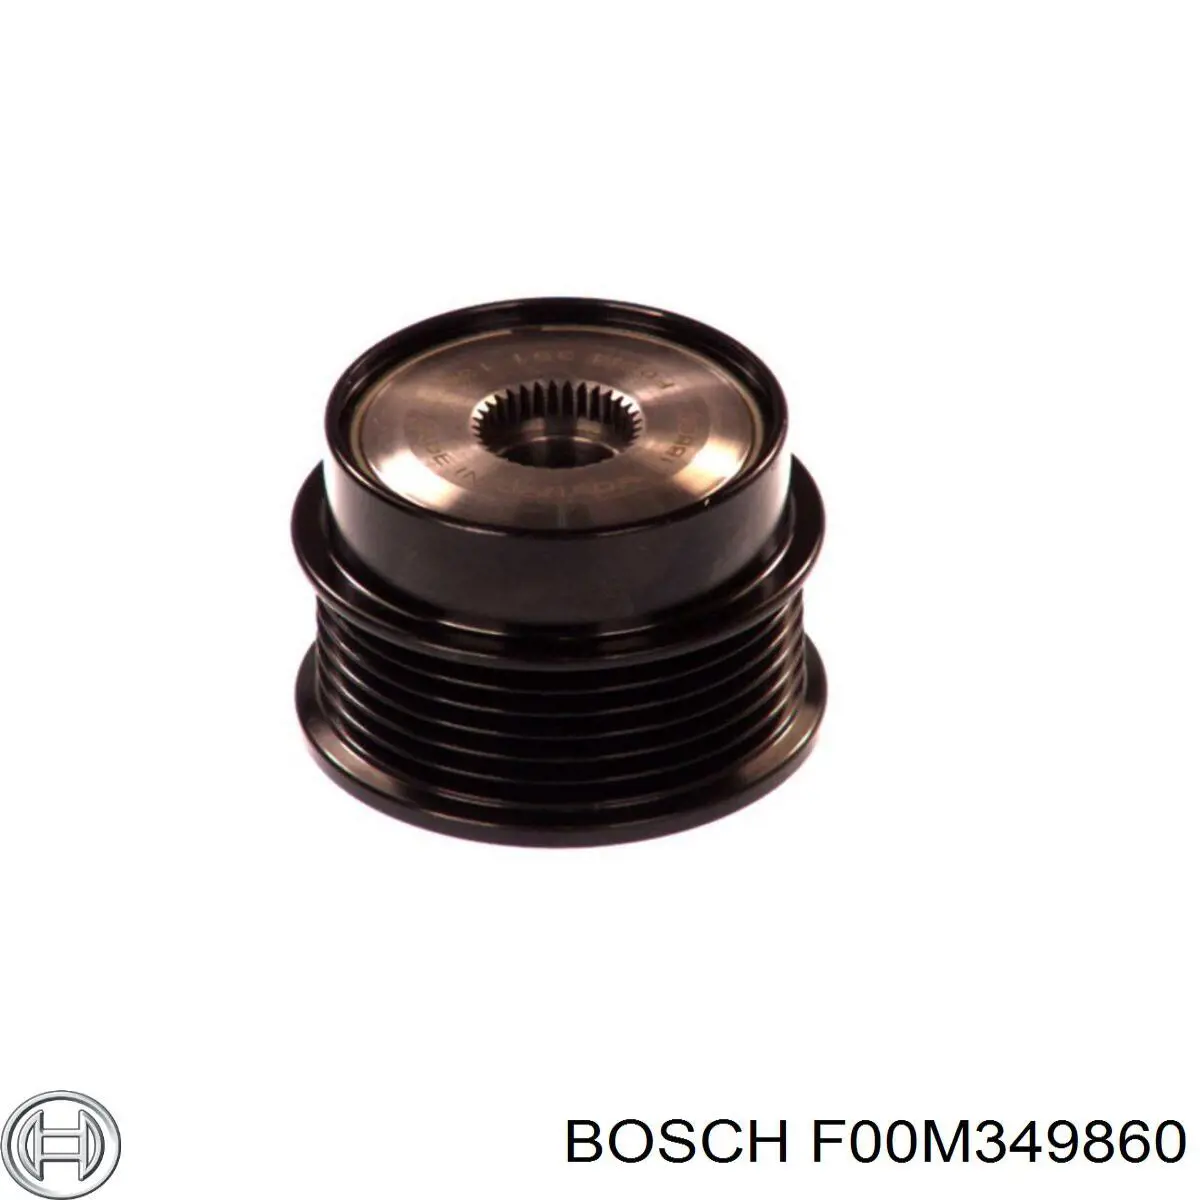 F00M349860 Bosch генератор